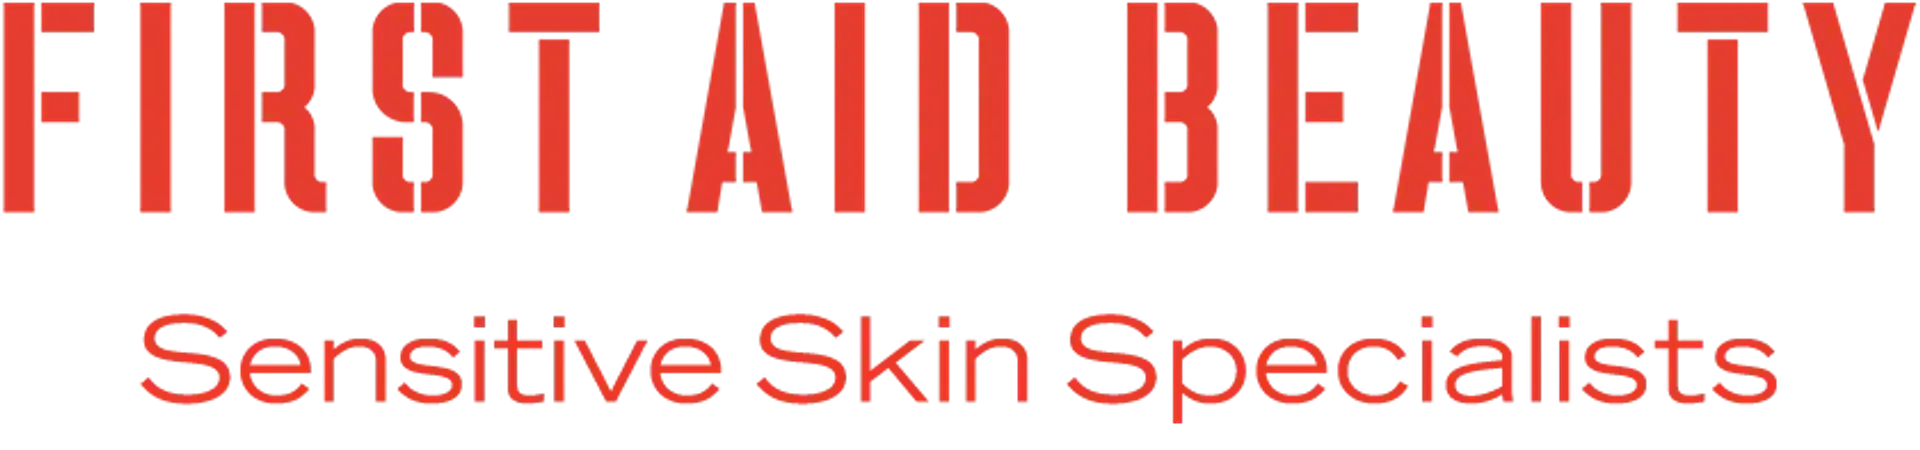 FIRST AID BEAUTY logo